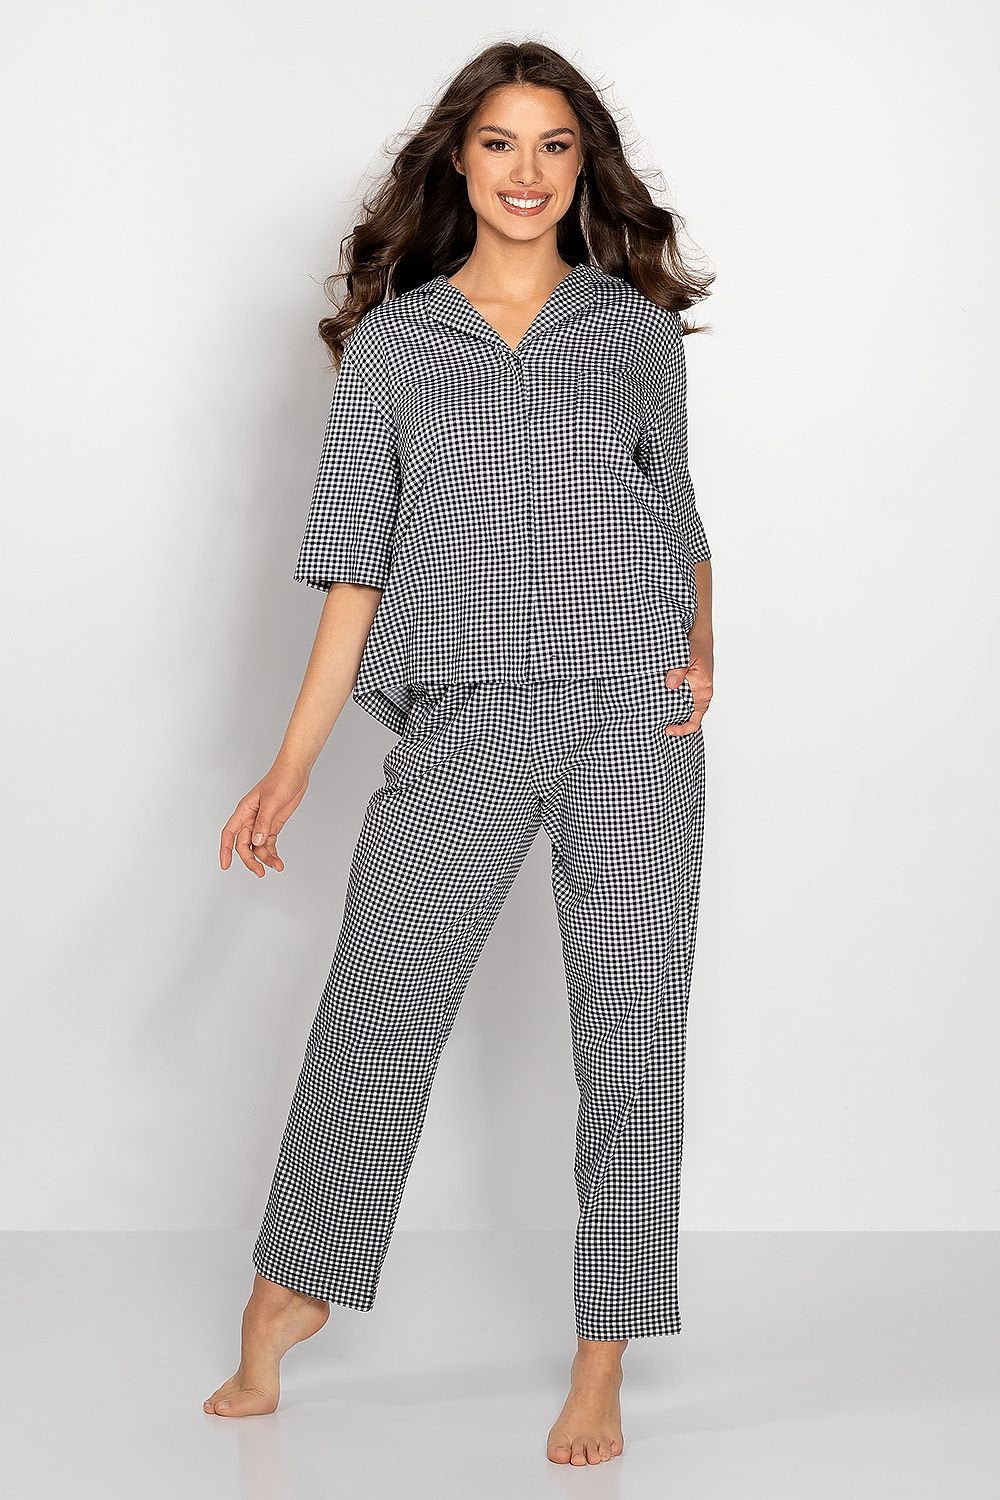 Collared Short Sleeve Checkered Women’s Pajamas Set